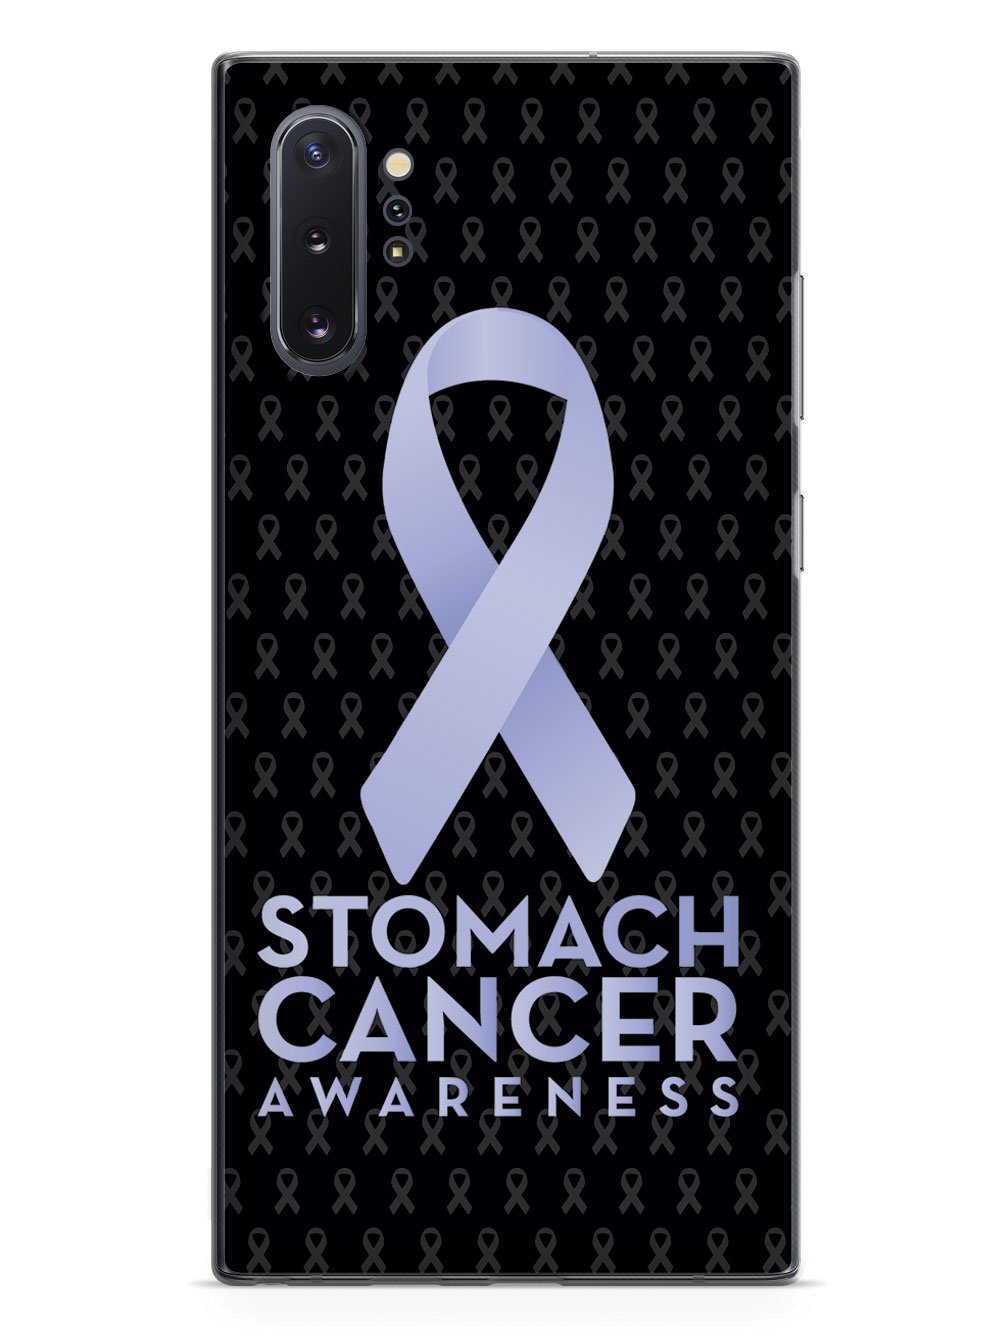 Stomach Cancer Awareness - Black Case